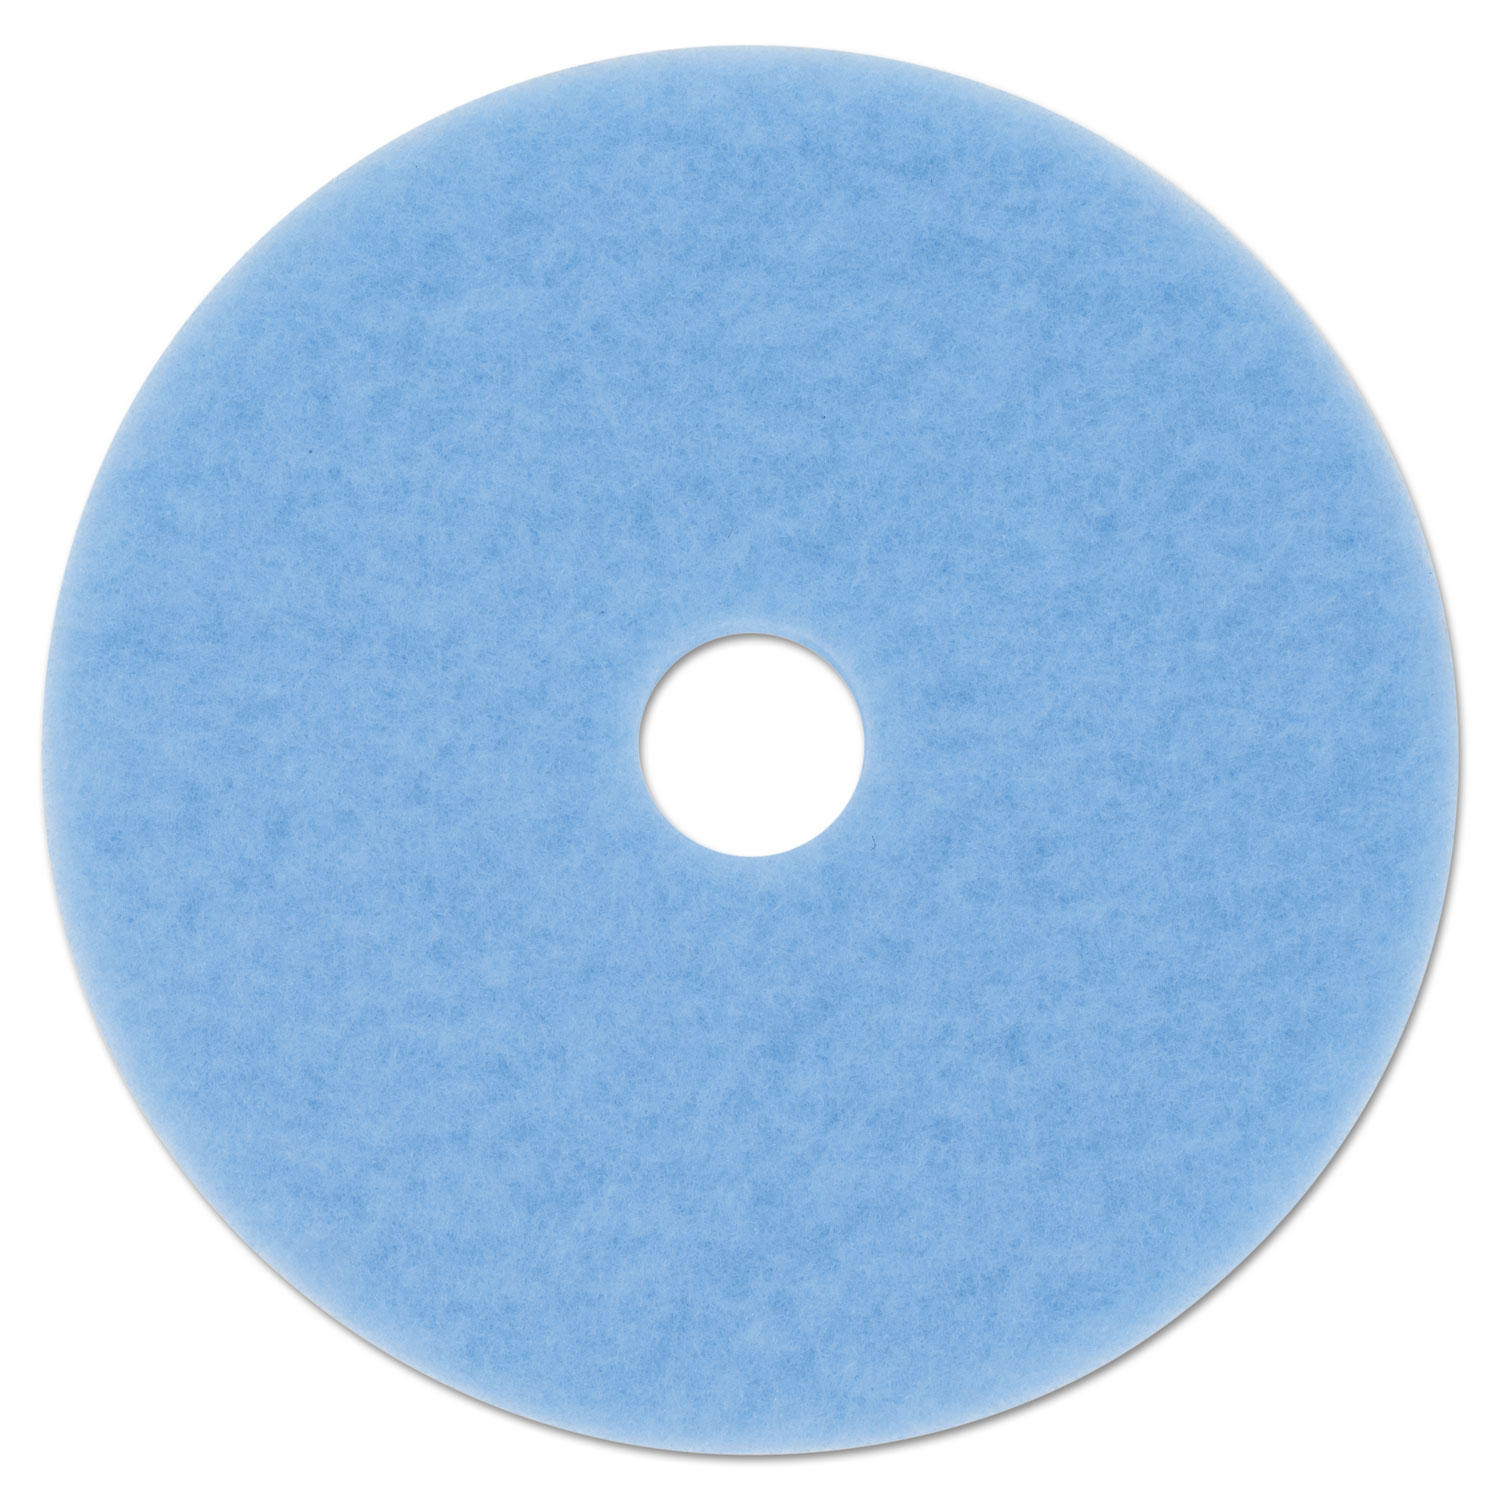 Sky Blue Hi-Performance Burnish Pad 3050, 17 Diameter, Sky Blue, 5/Carton